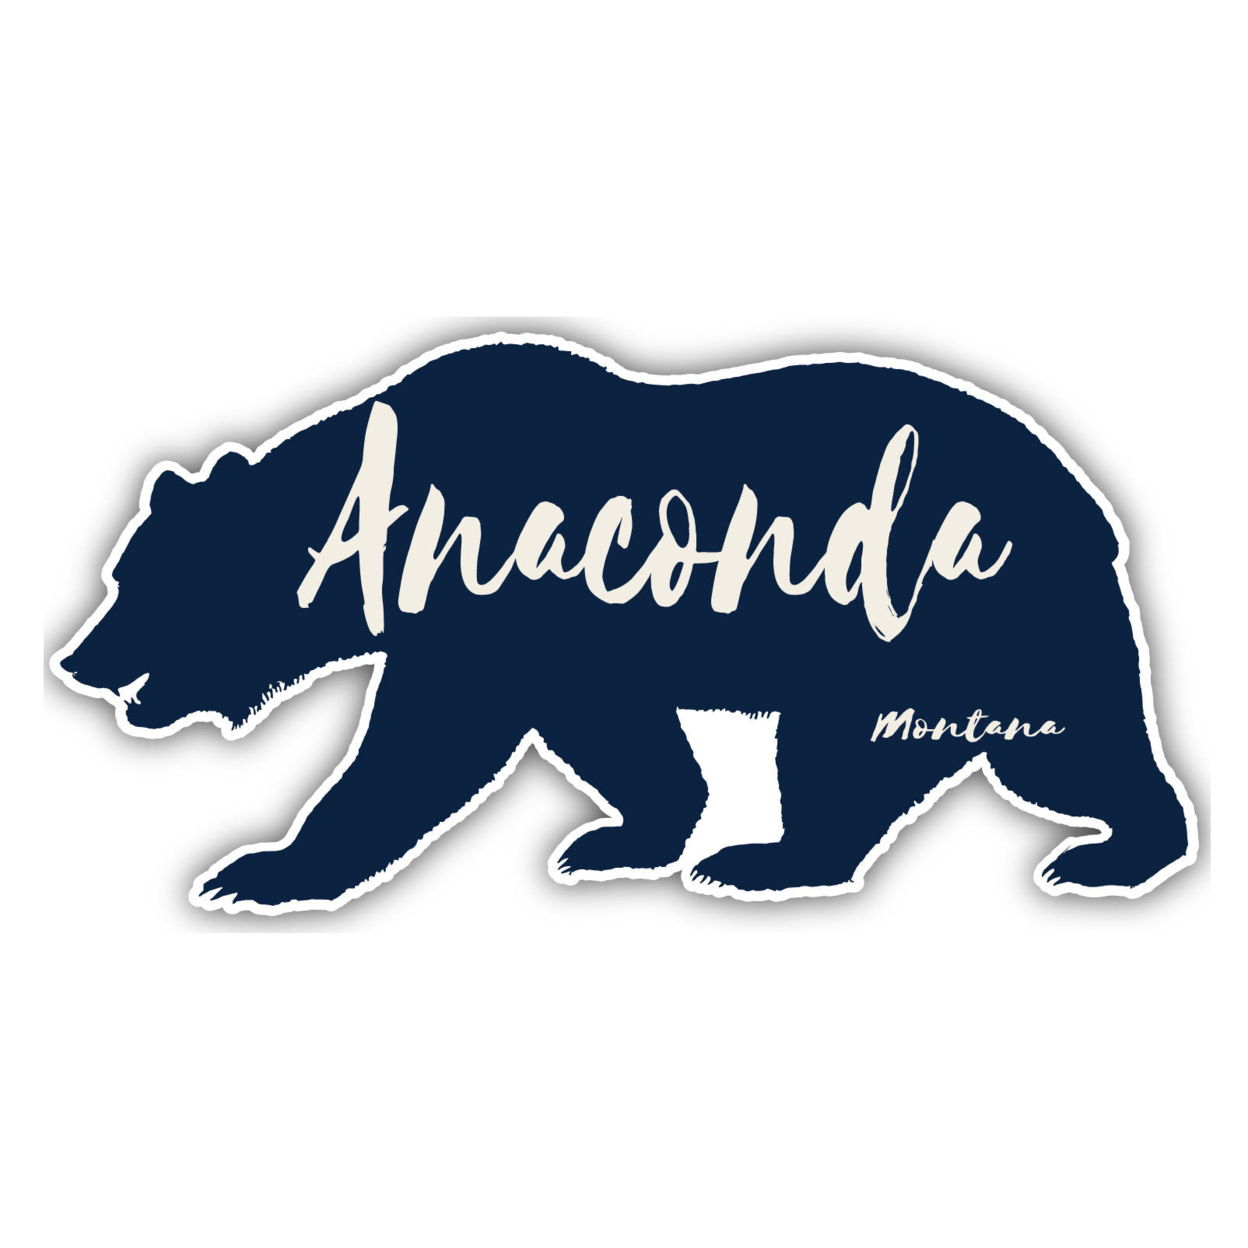 Anaconda Montana Souvenir Decorative Stickers (Choose Theme And Size) - Single Unit, 10-Inch, Bear